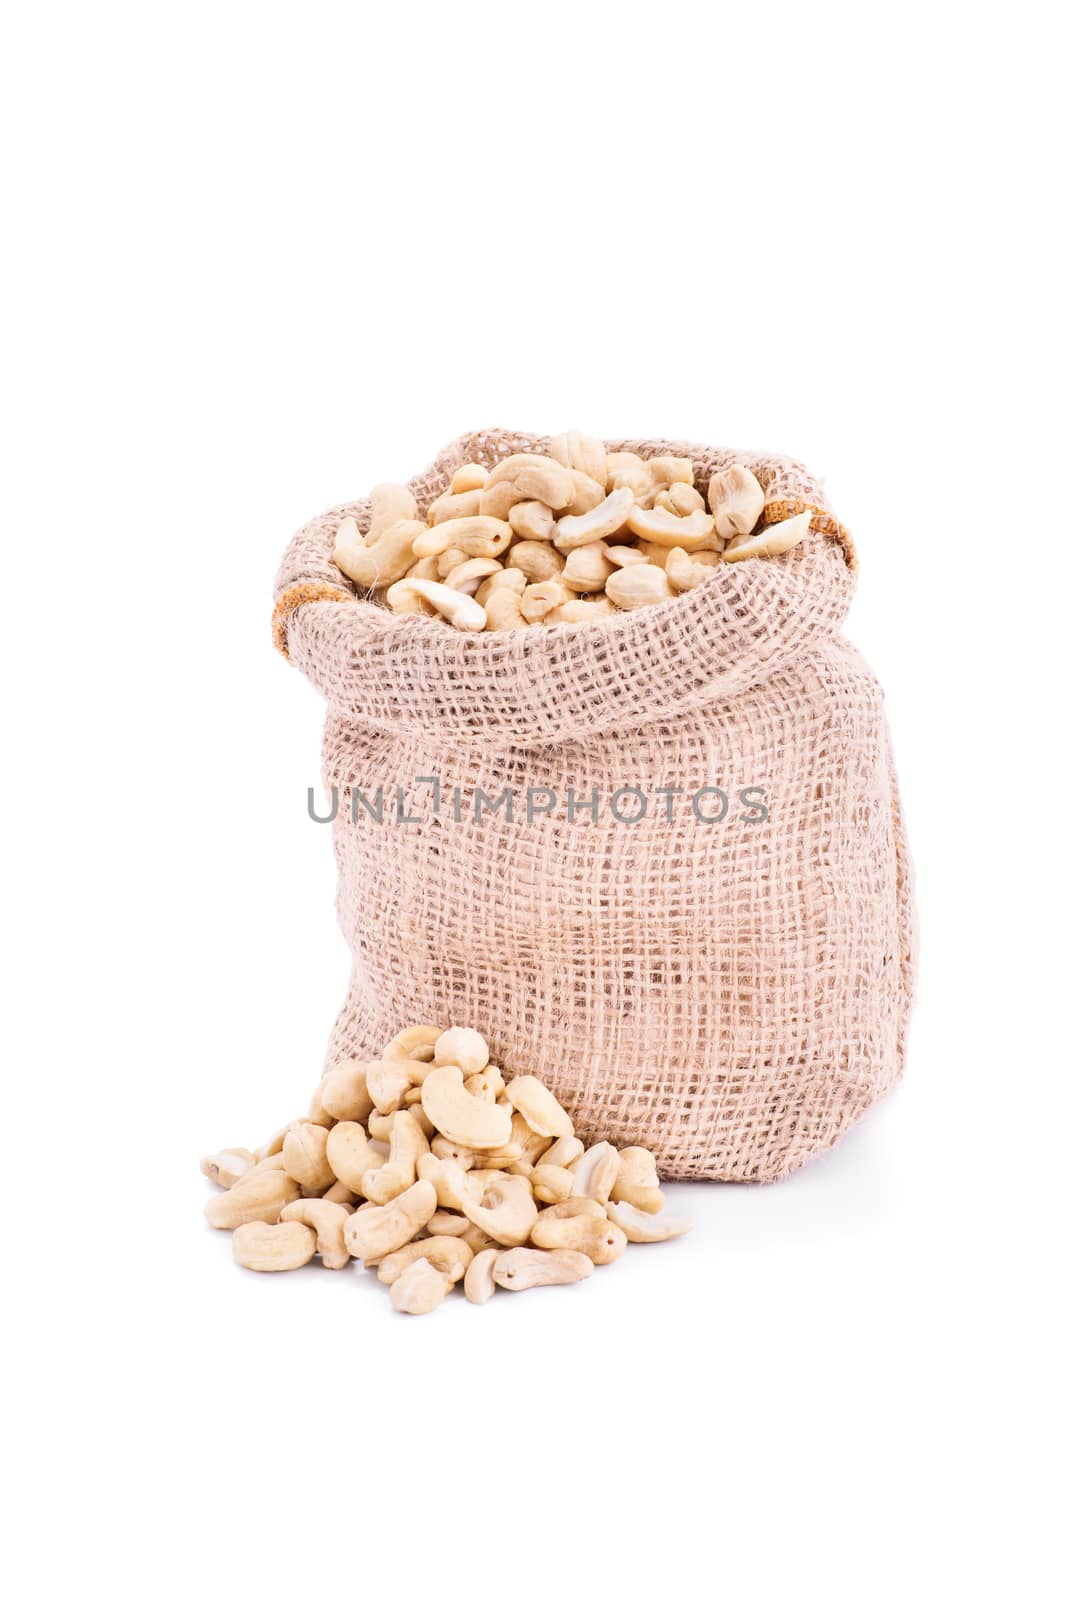 Small sack of fresh cashews by Mendelex